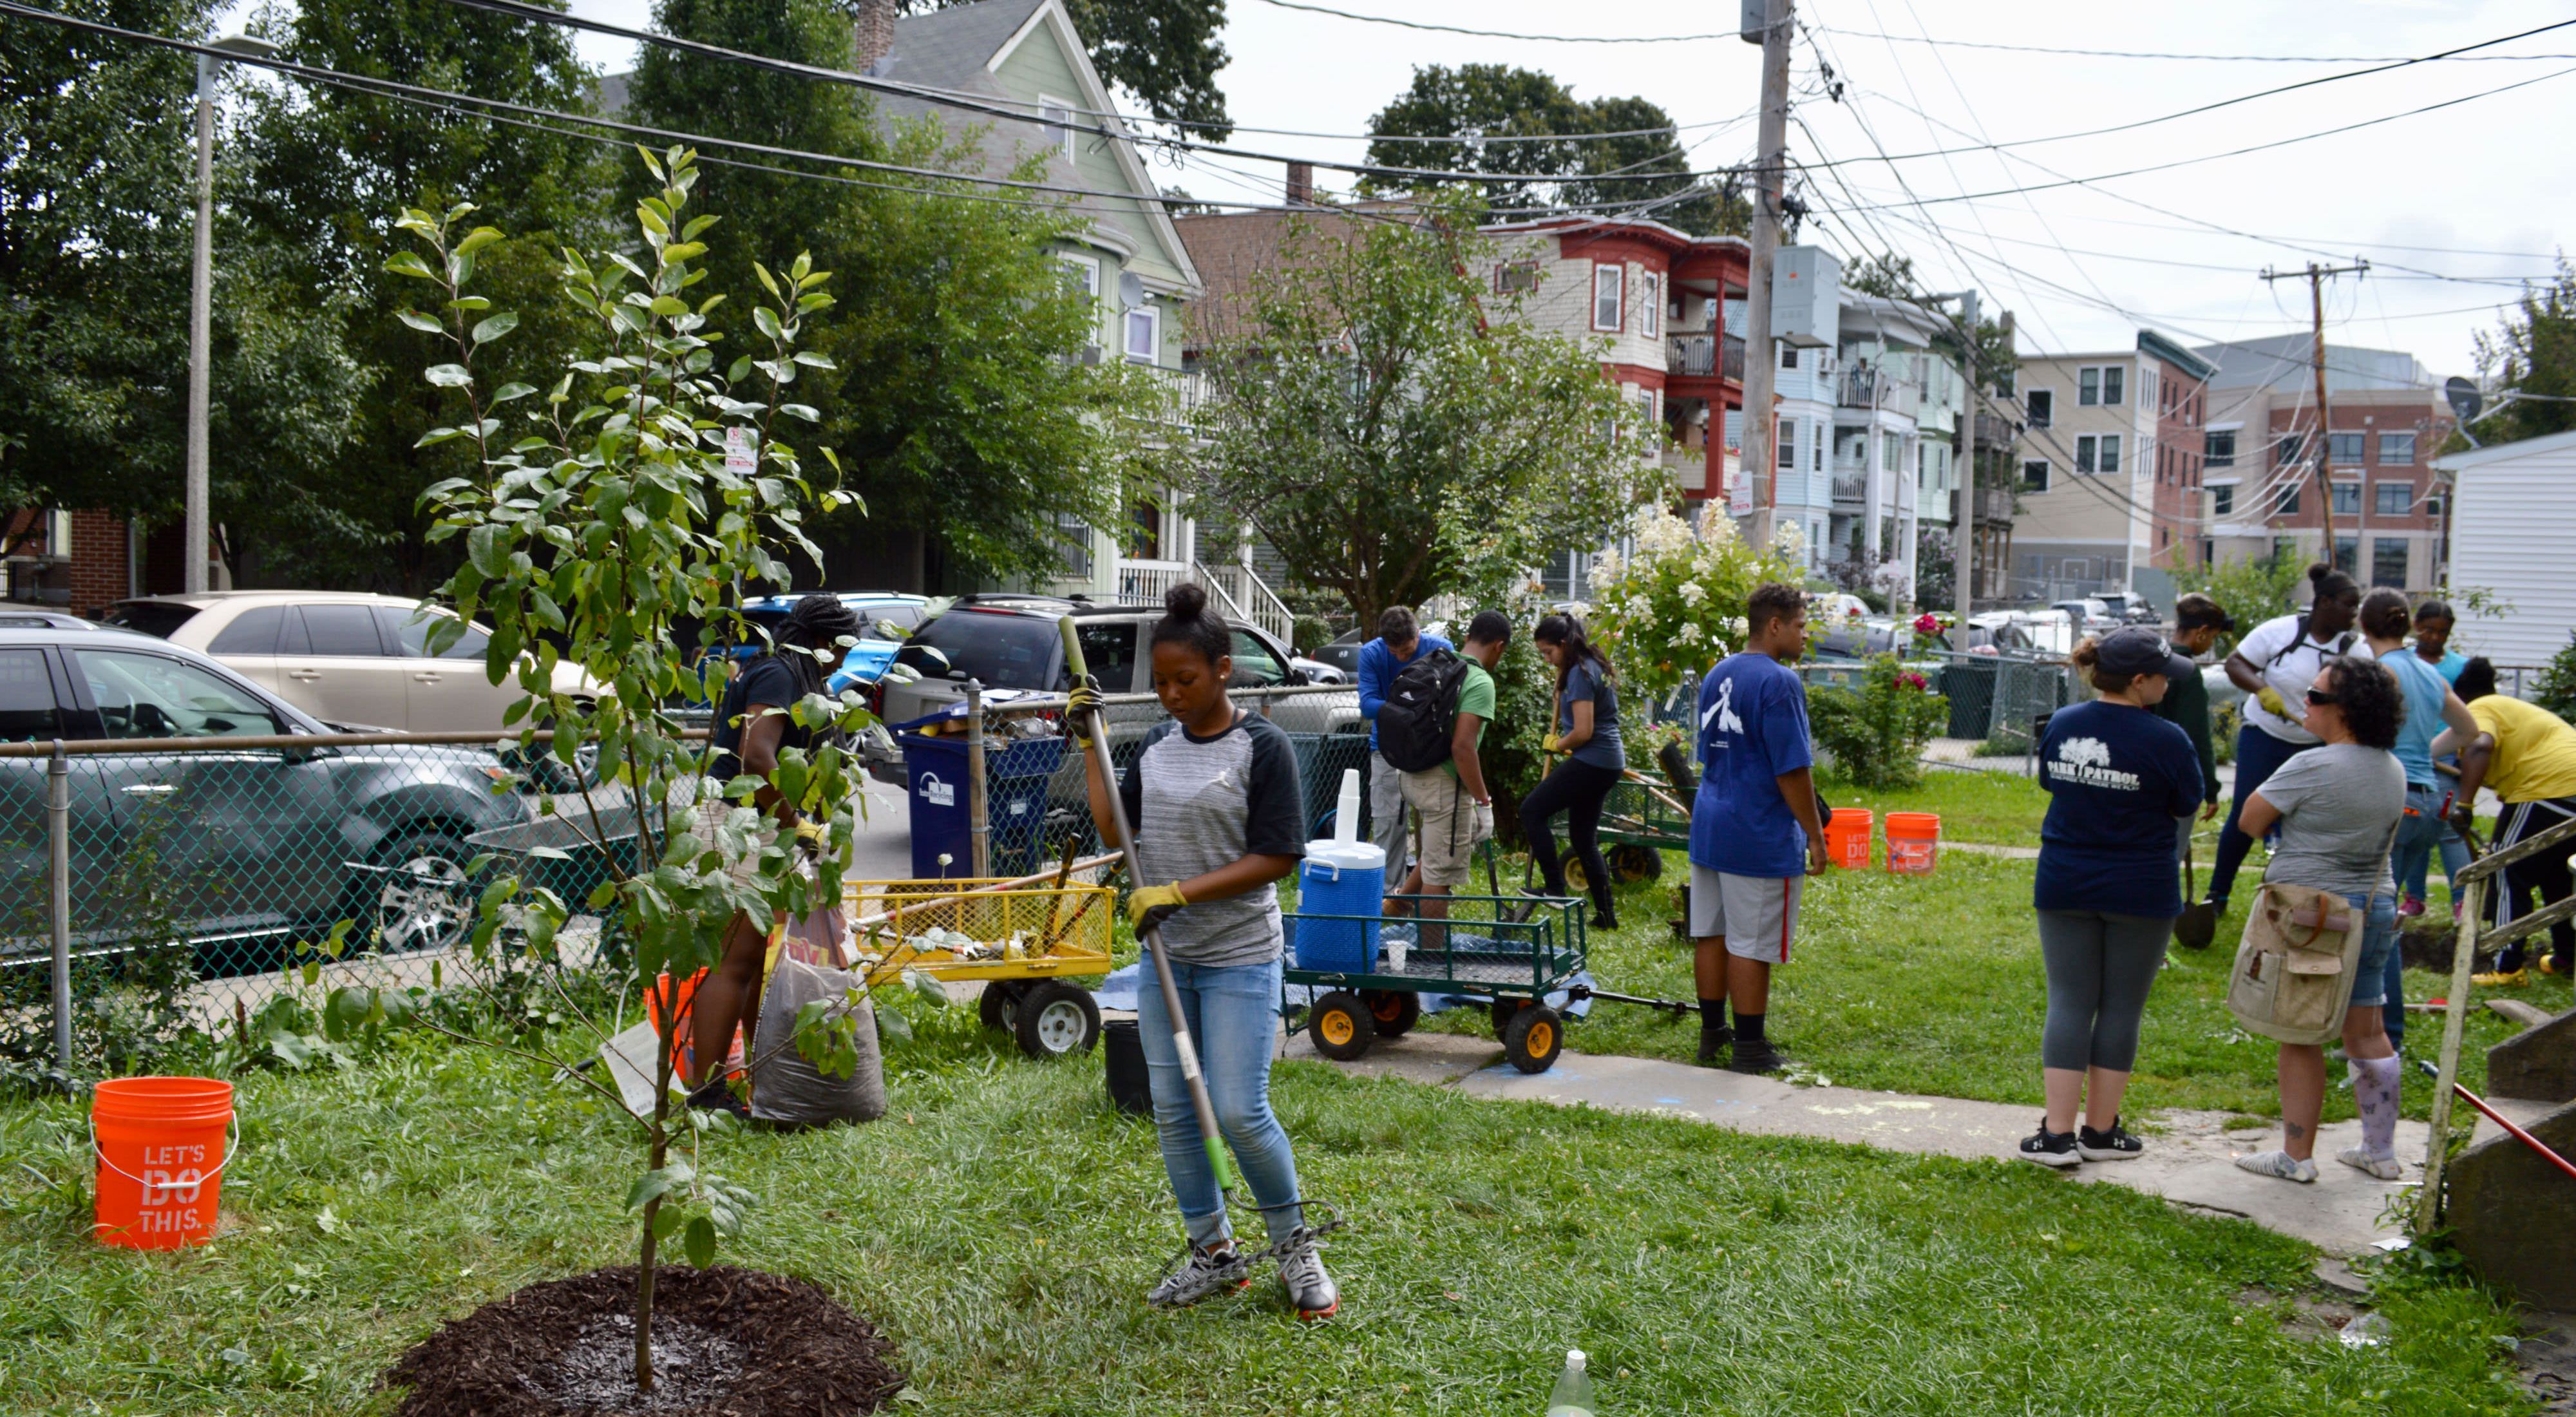 Tree planting in the Codman Square neighborhood of Boston